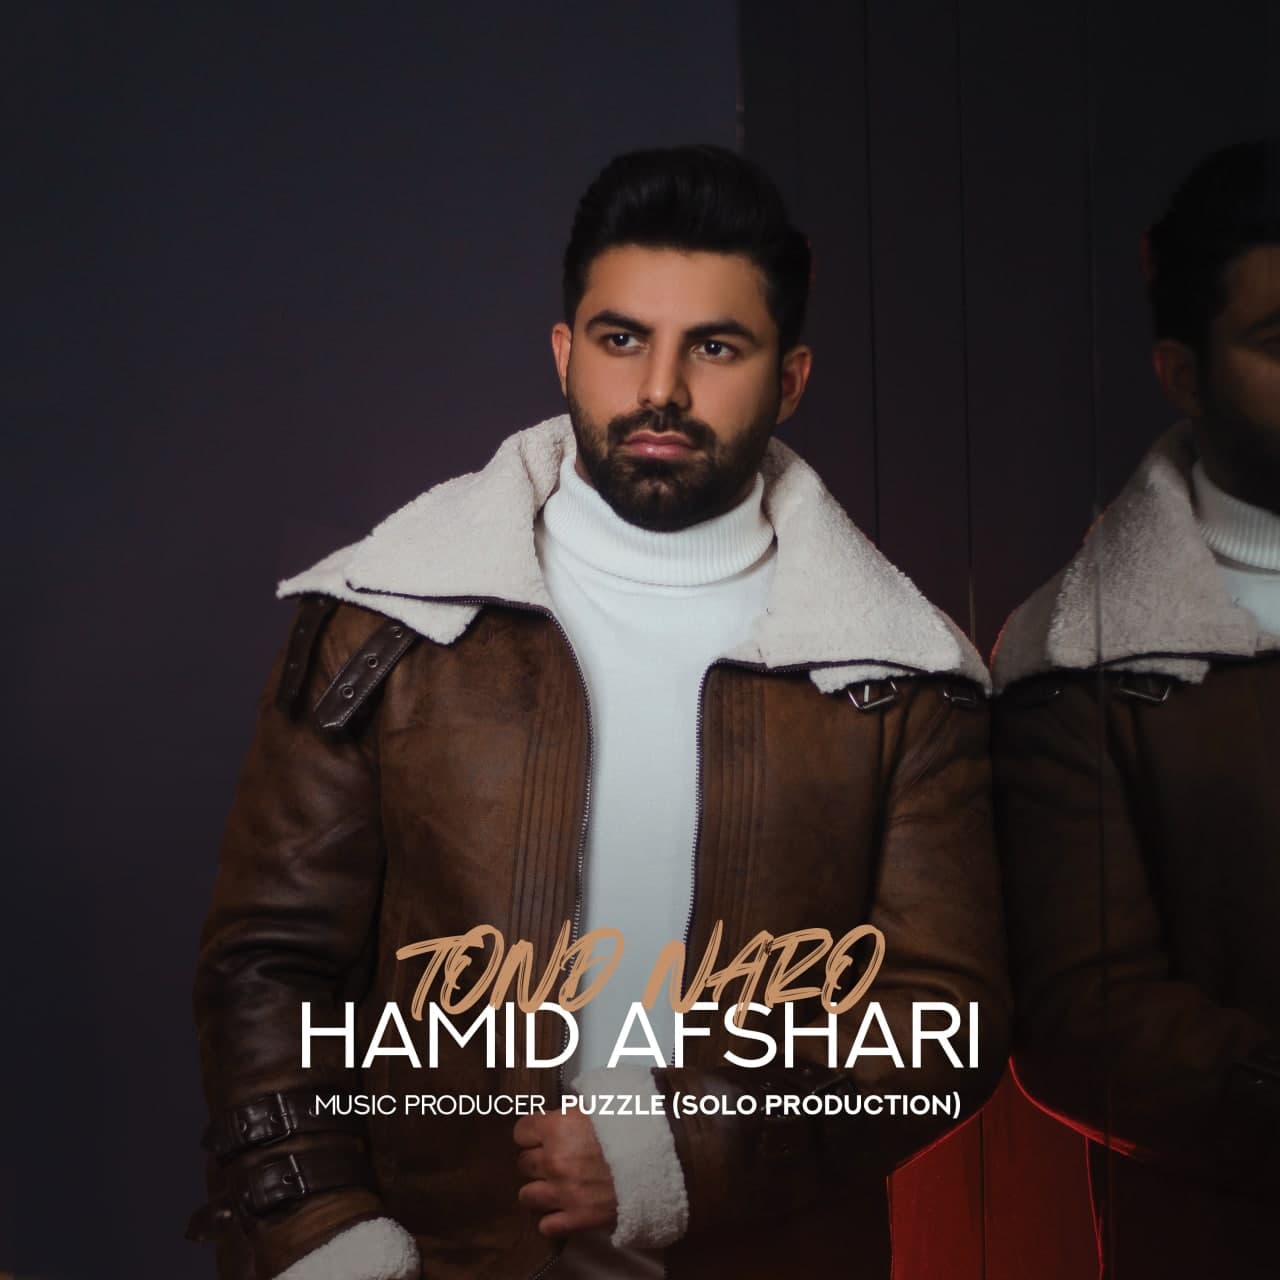 Hamid Afshari – Tond Naro